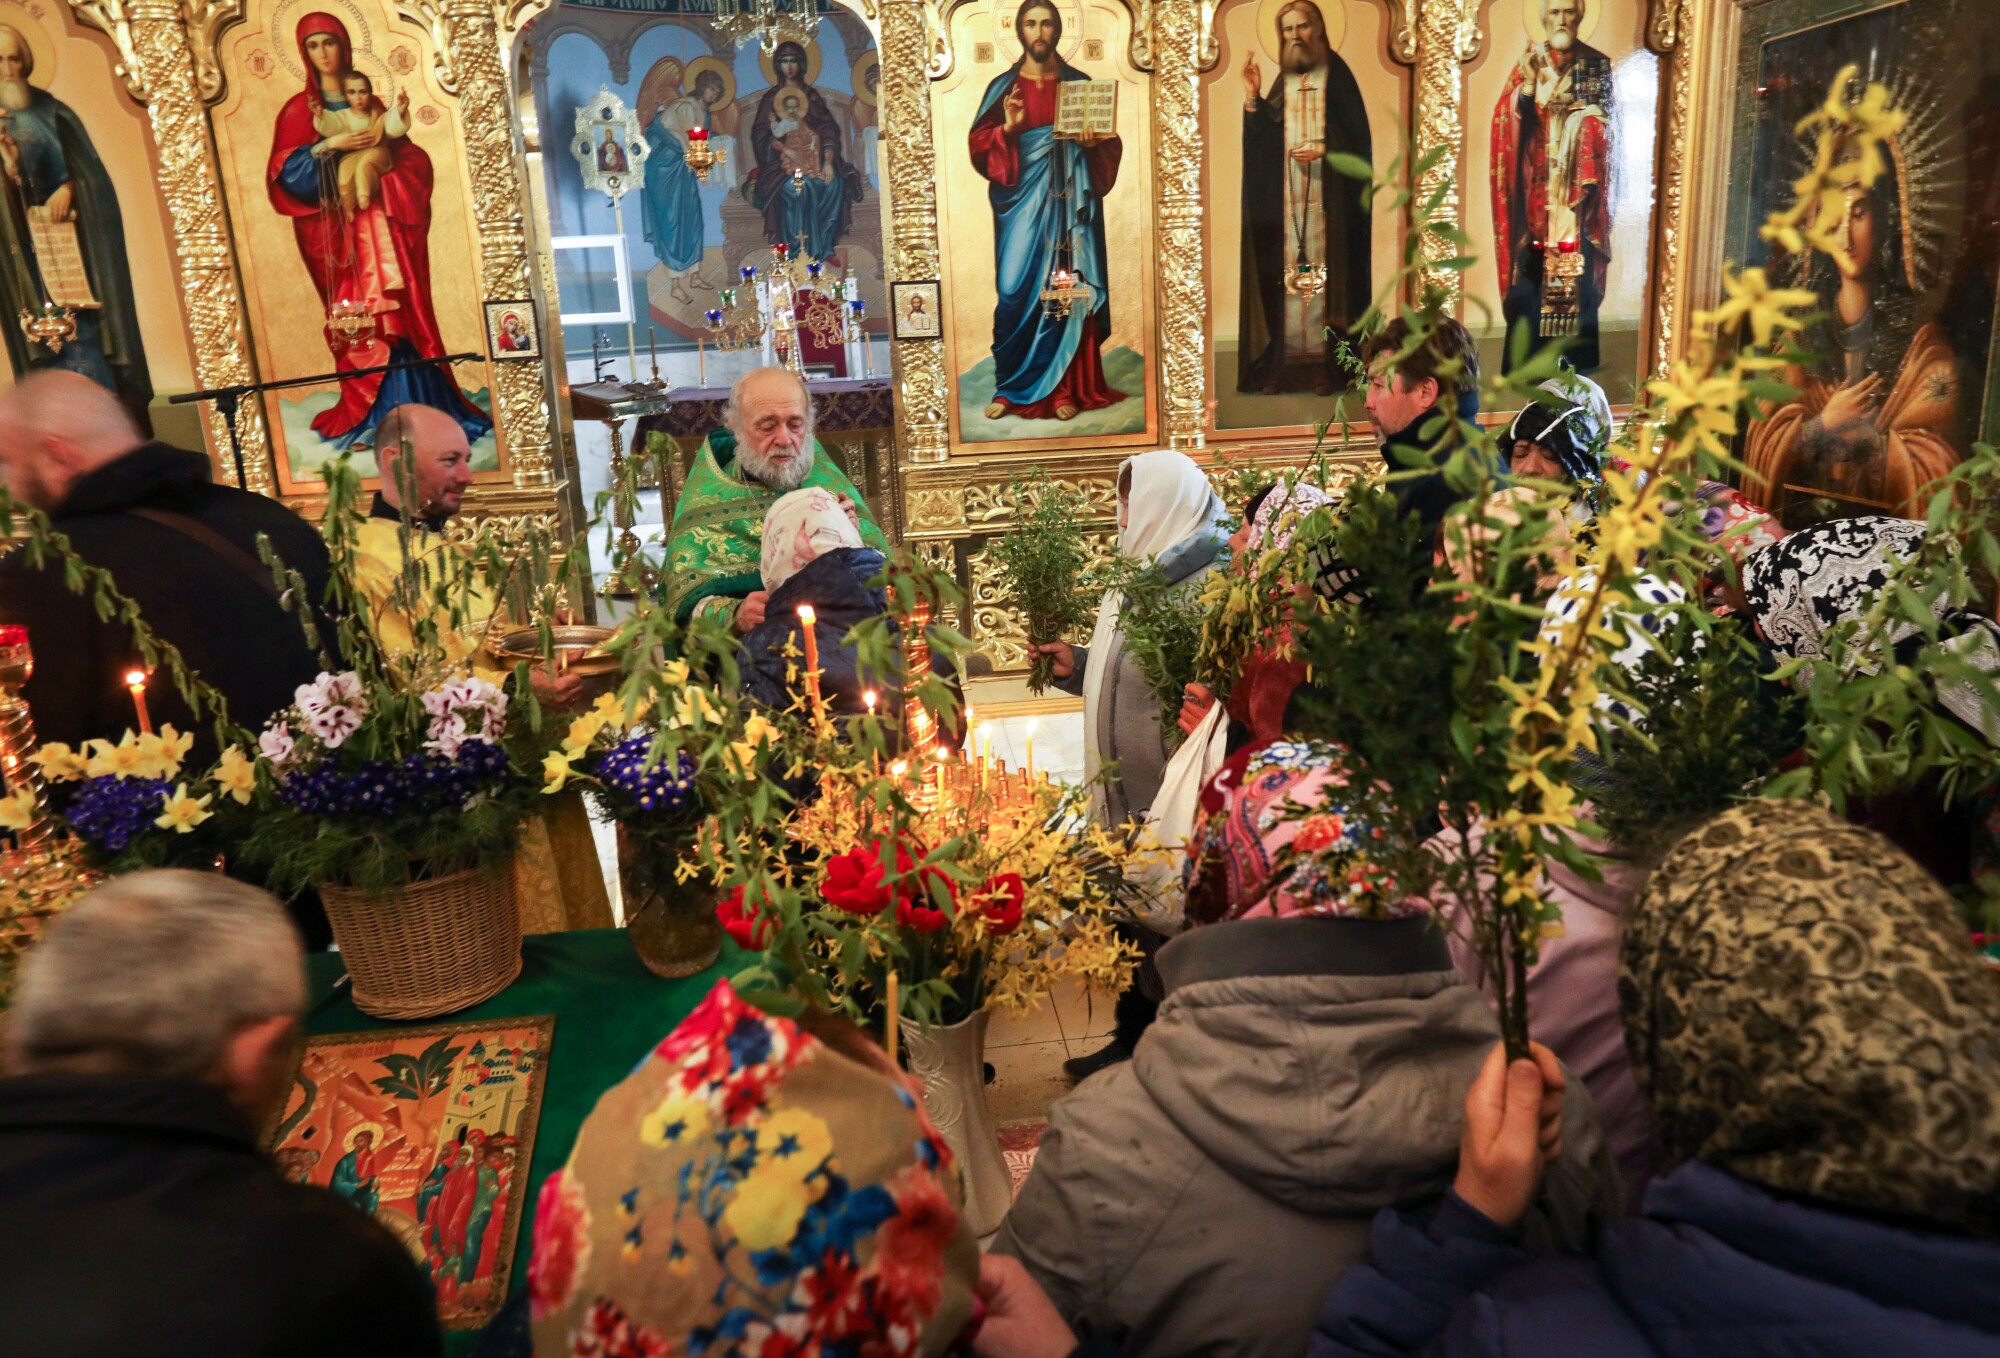 Father Valeri Lebed blesses those attending Palm Sunday service at the Serafim Sarovsky Orthodox Church